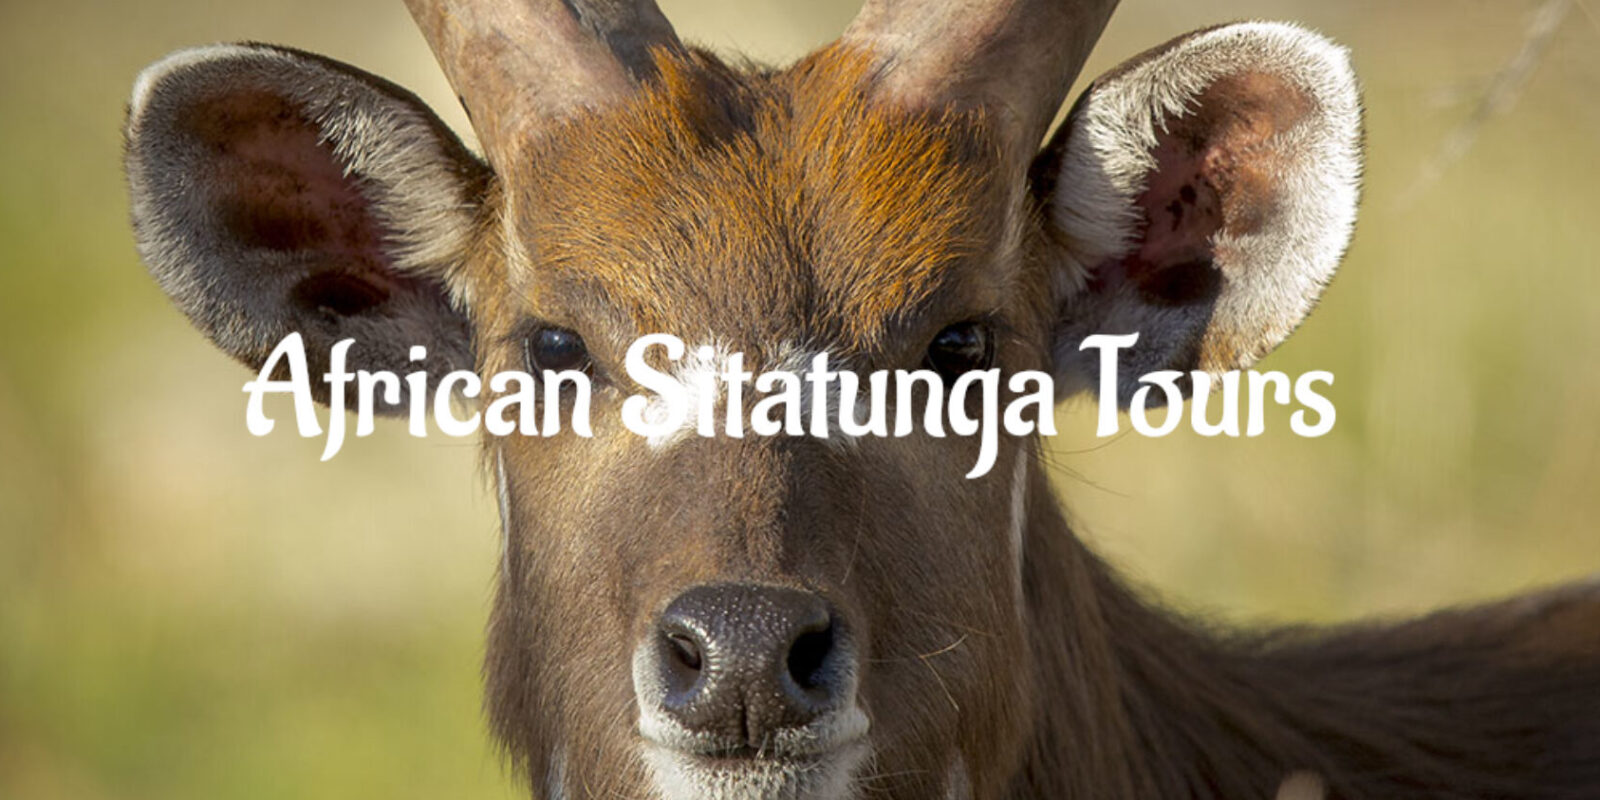 African Sitatunga Tours Namibia, Header